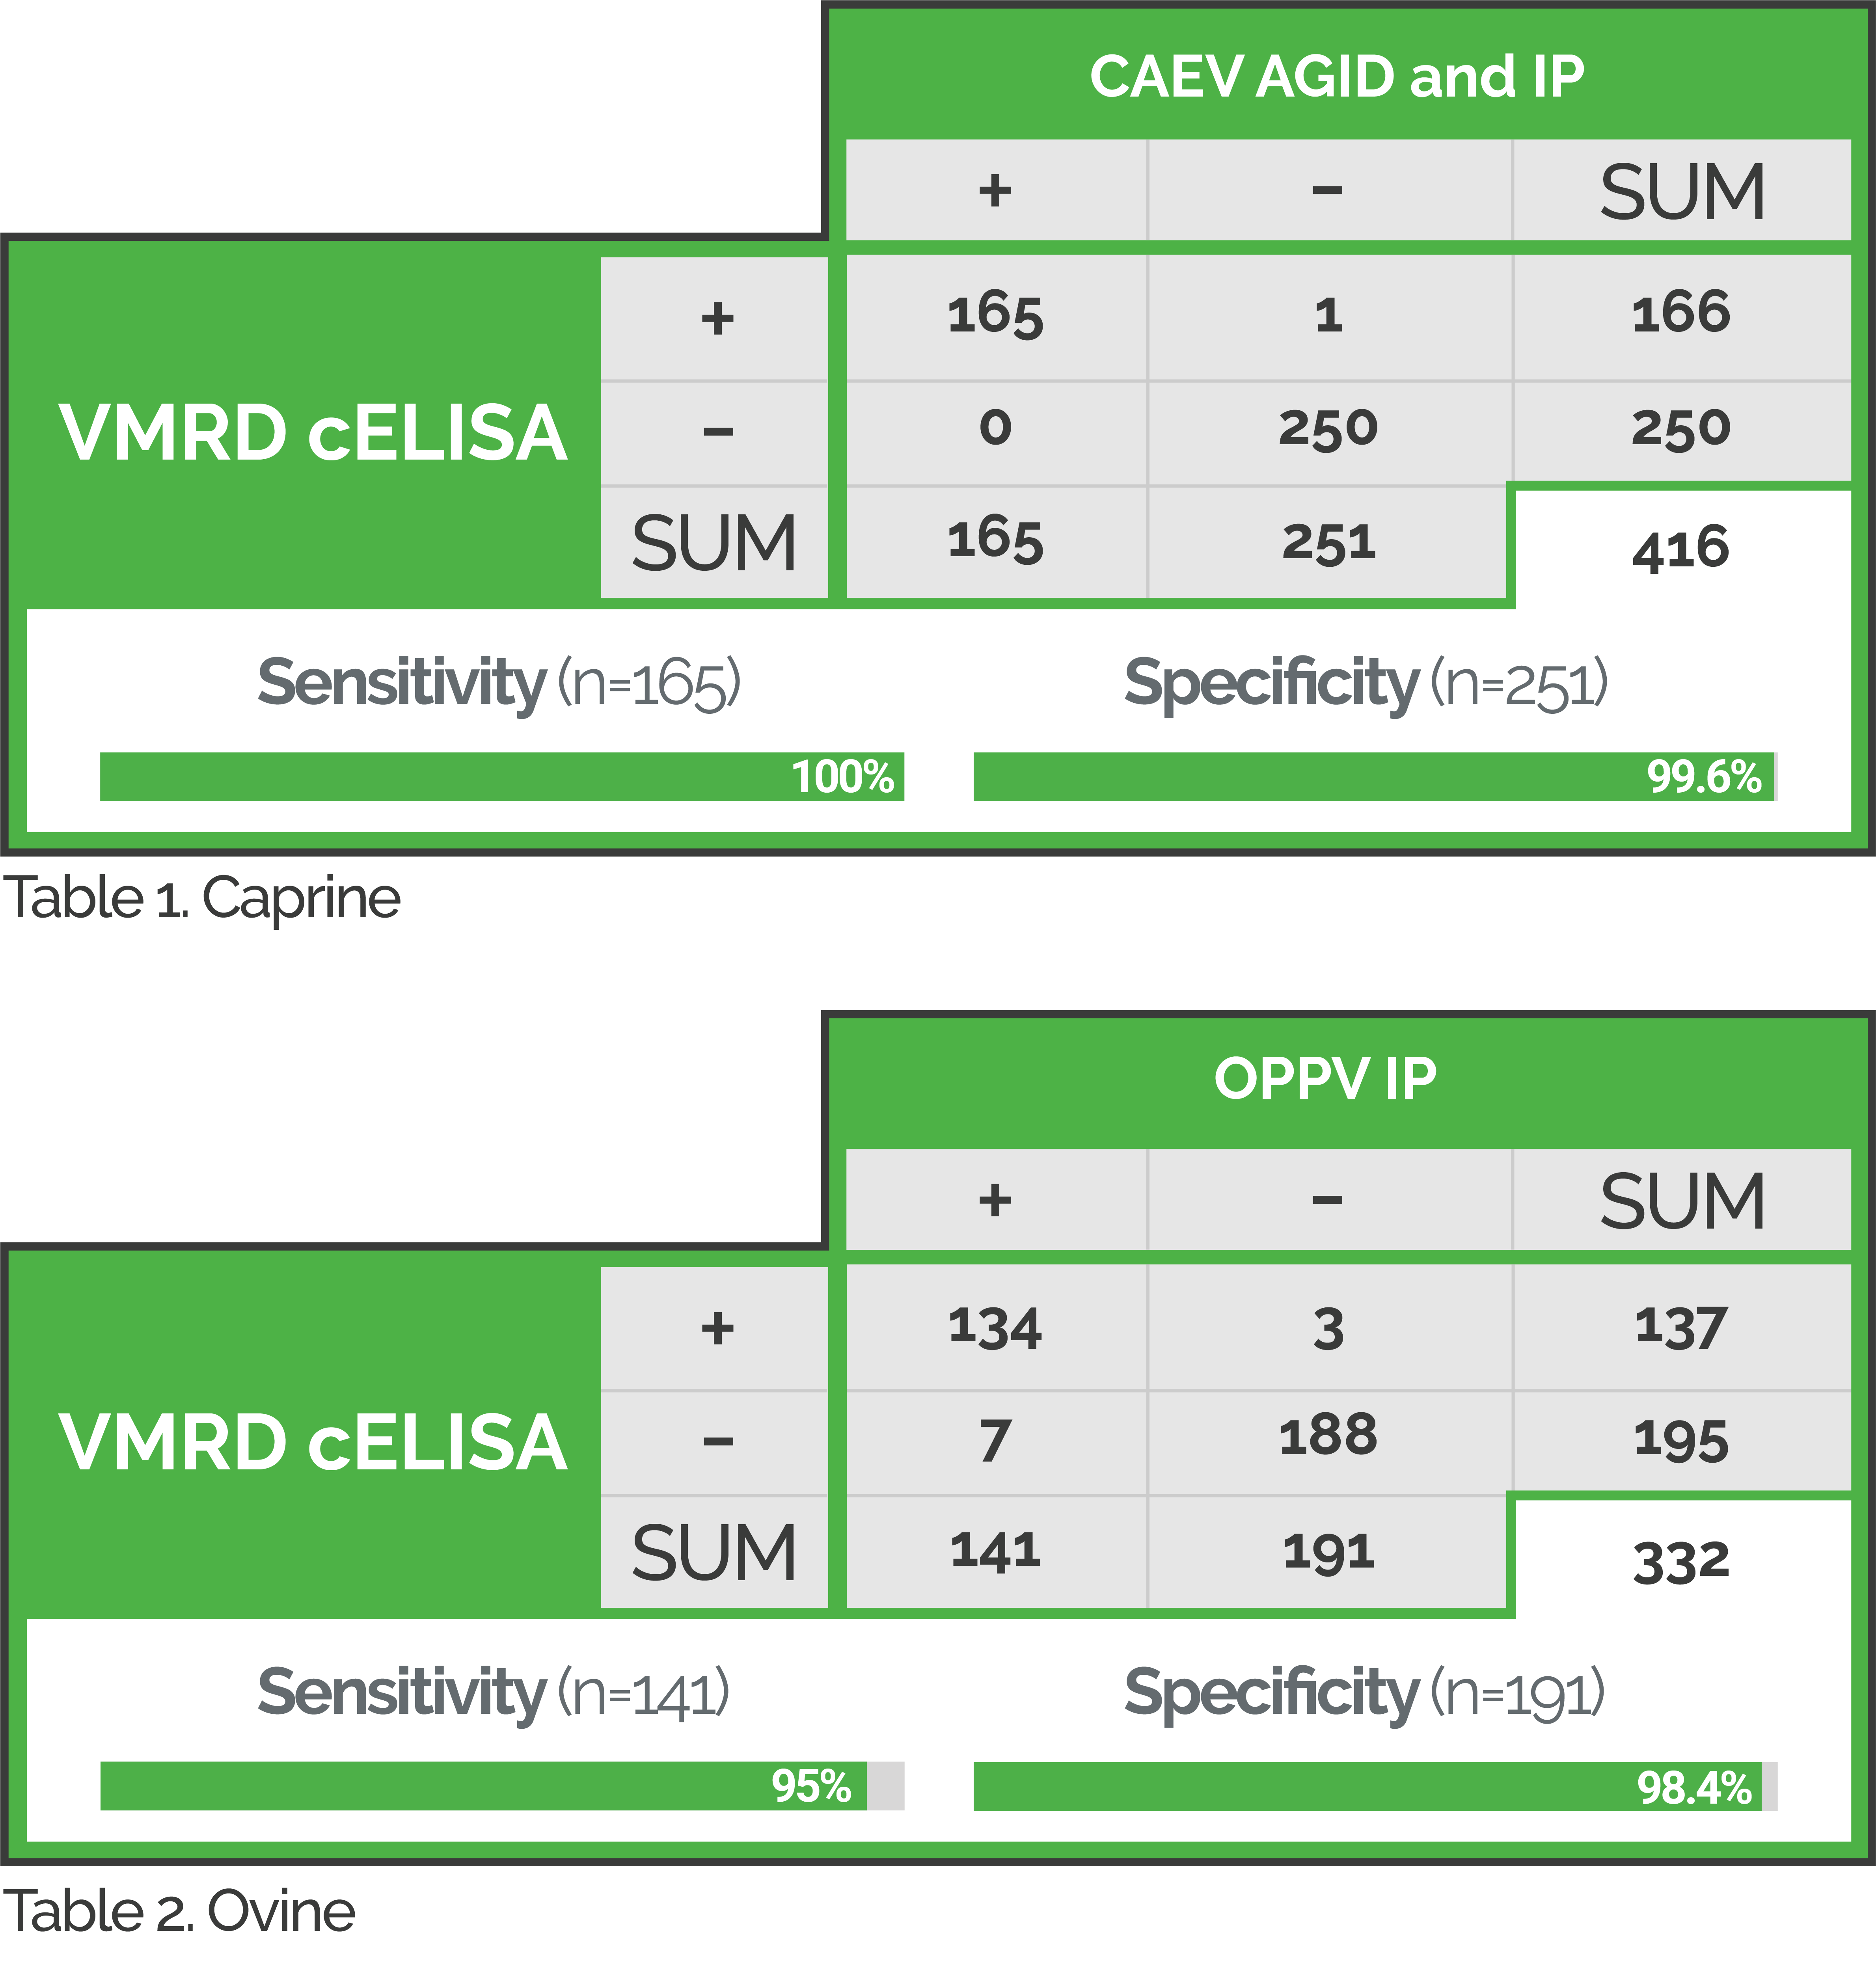 Table 1: Caprine samples, CAEV AGID & IP sensitivity & specificity; Table 2: Ovine samples, OPPV IP sensitivity & specificity